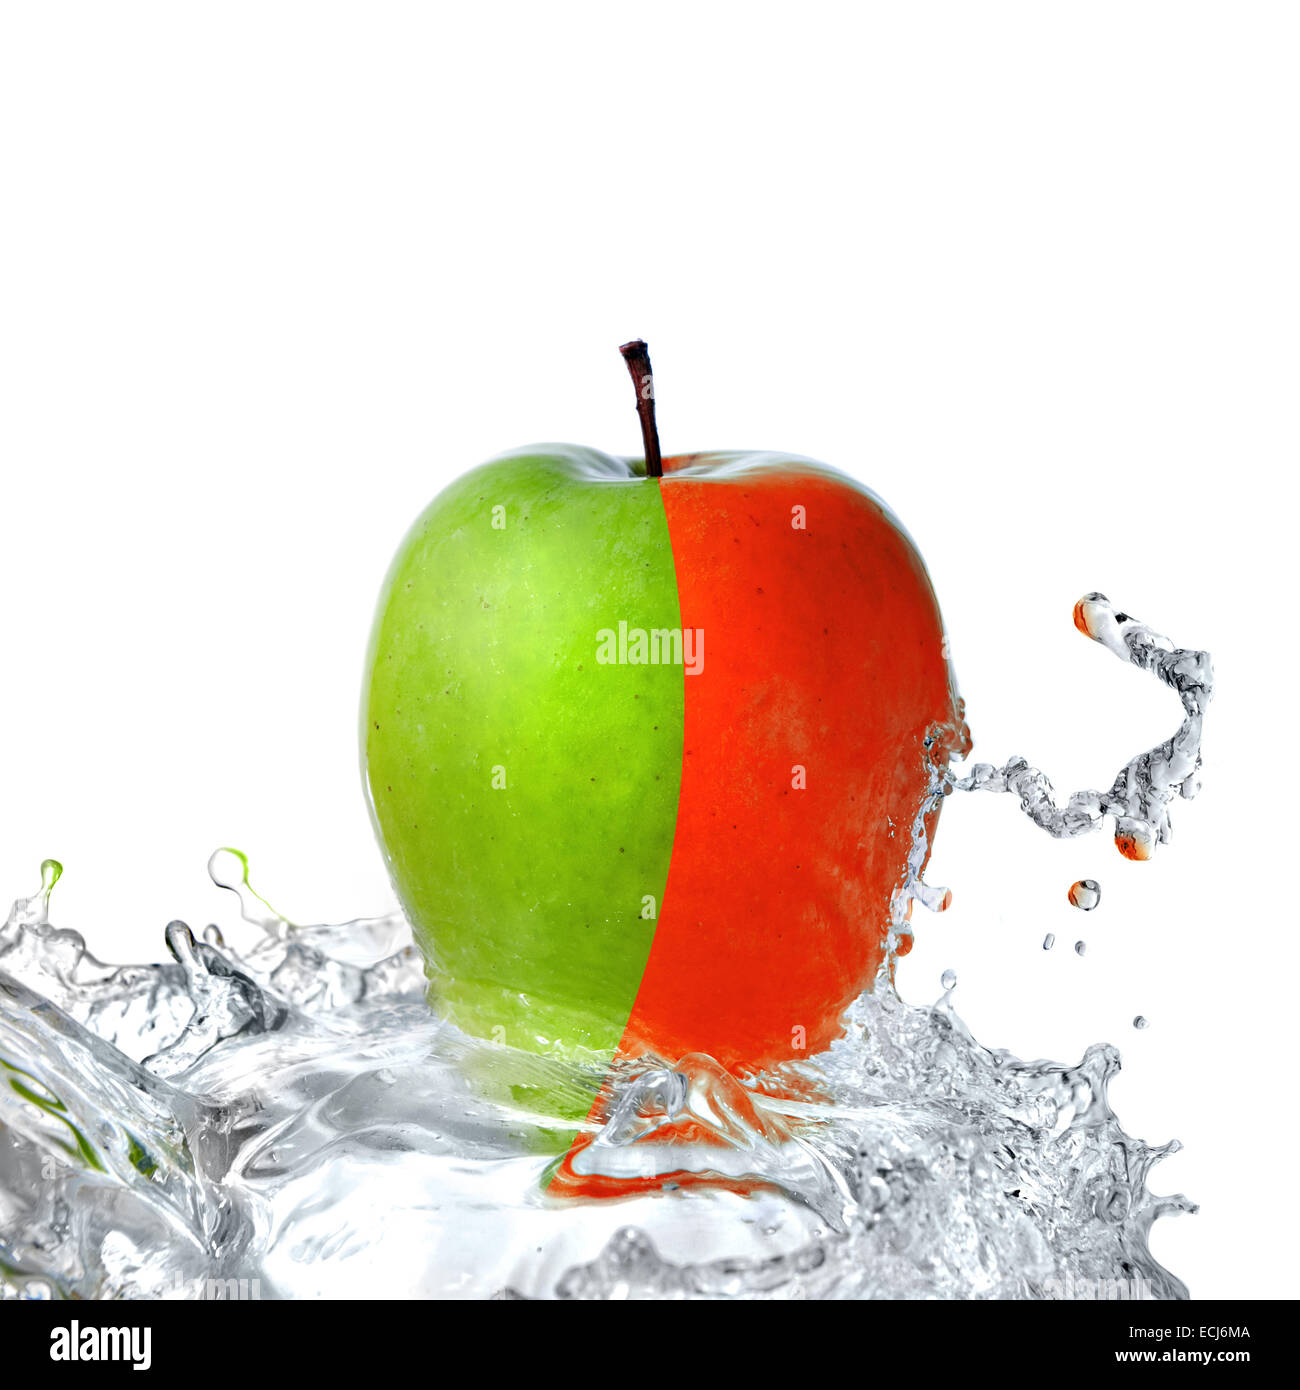 https://c8.alamy.com/comp/ECJ6MA/fresh-water-splash-on-red-and-green-apple-isolated-on-white-ECJ6MA.jpg